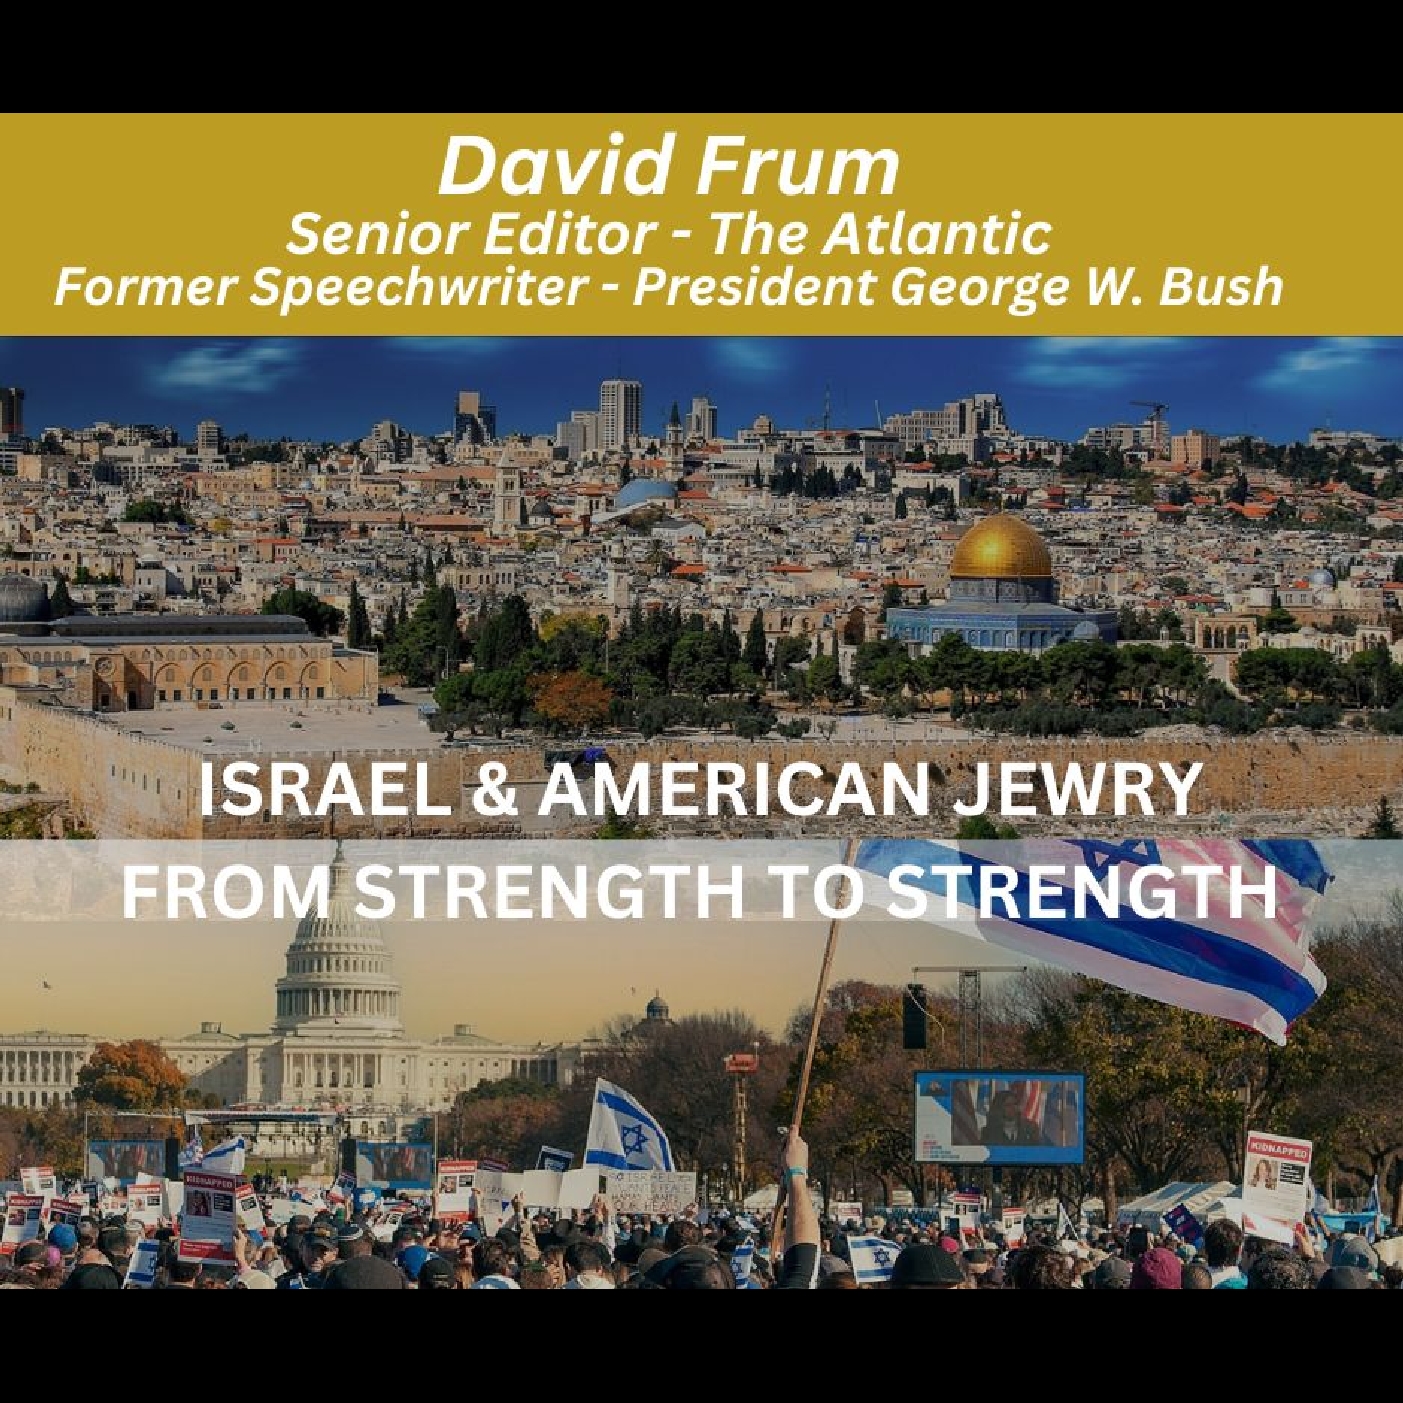 From Strength to Strength - David Frum - Former Speechwriter for President George W. Bush